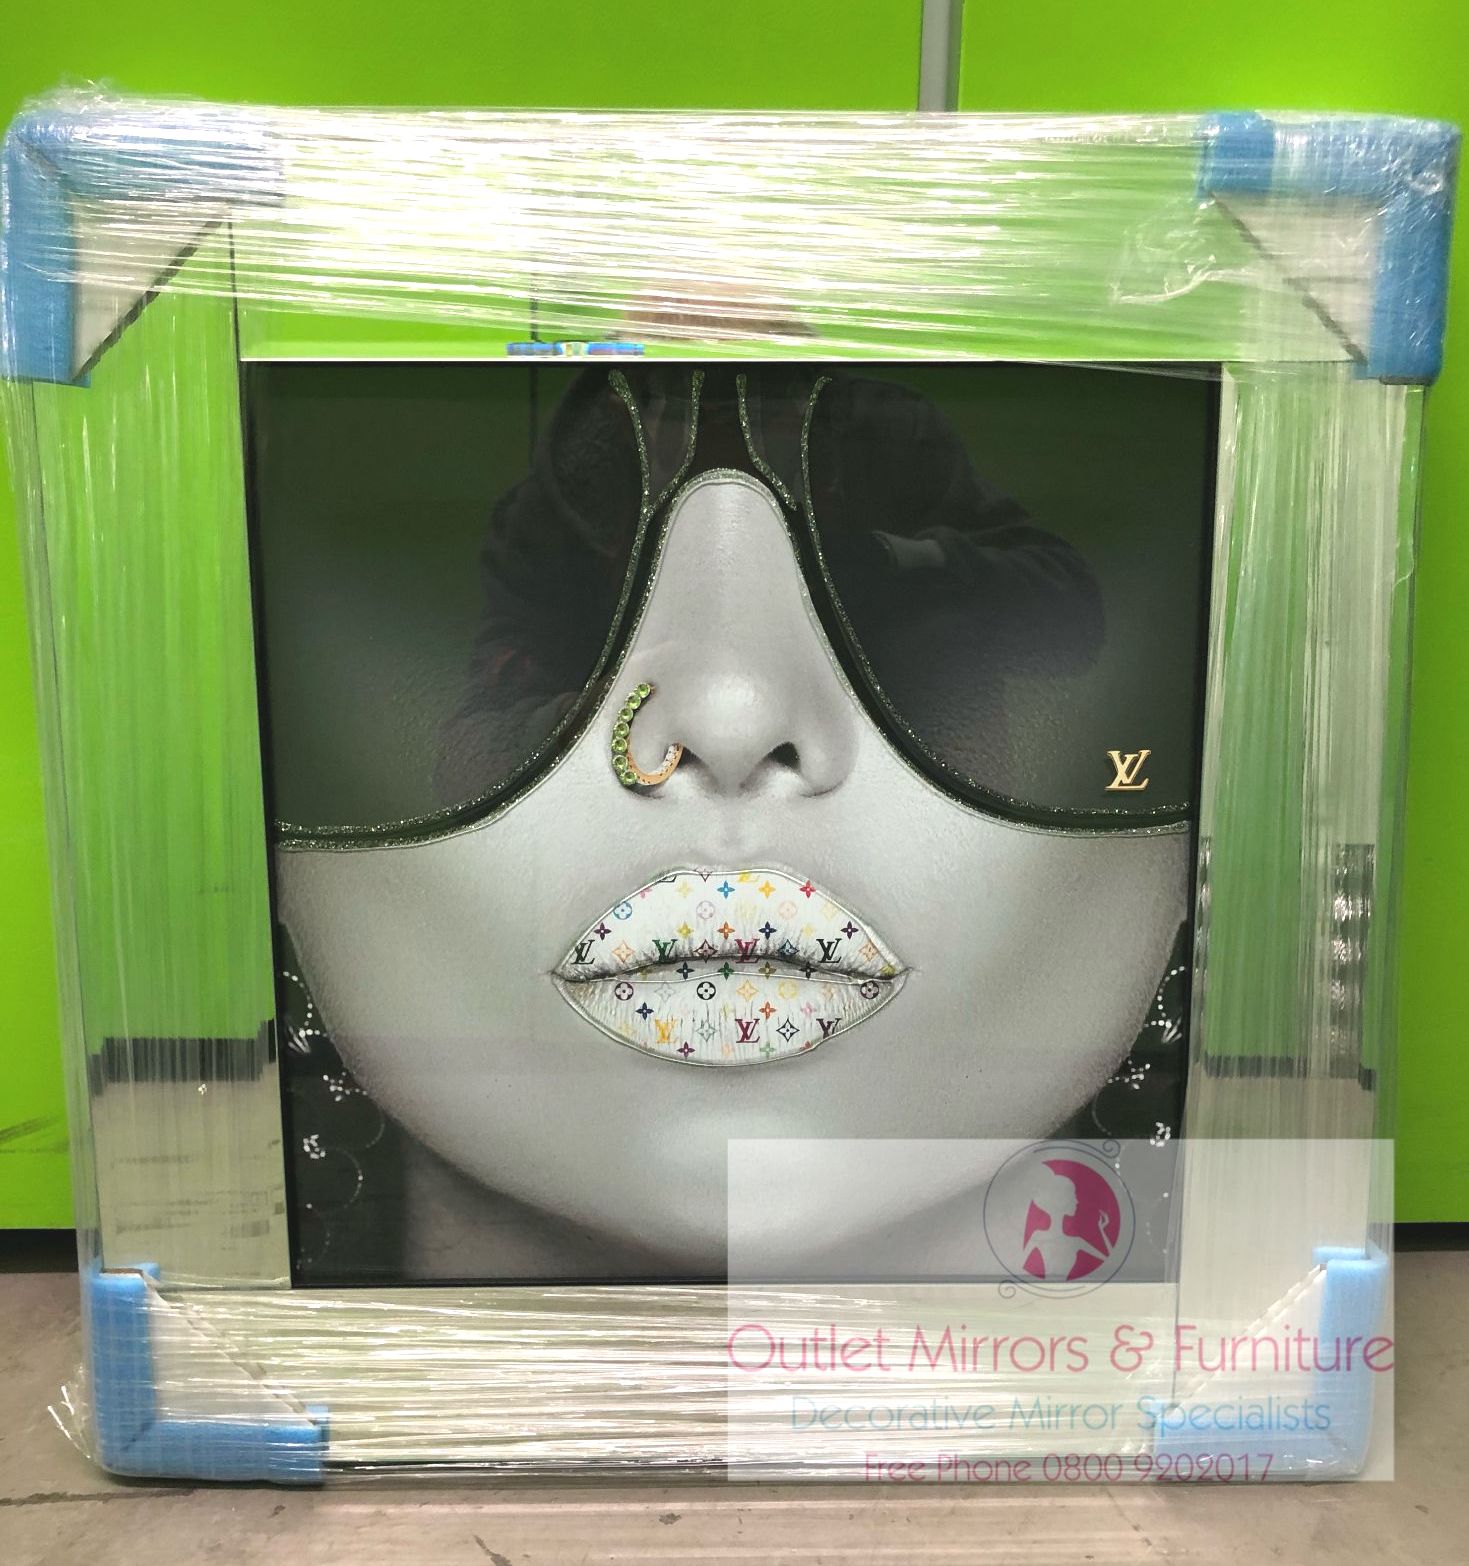 Media Art louis Vuitton multi colour Lips Diamond Crush Framed sparkle Art  60cm x 60cm